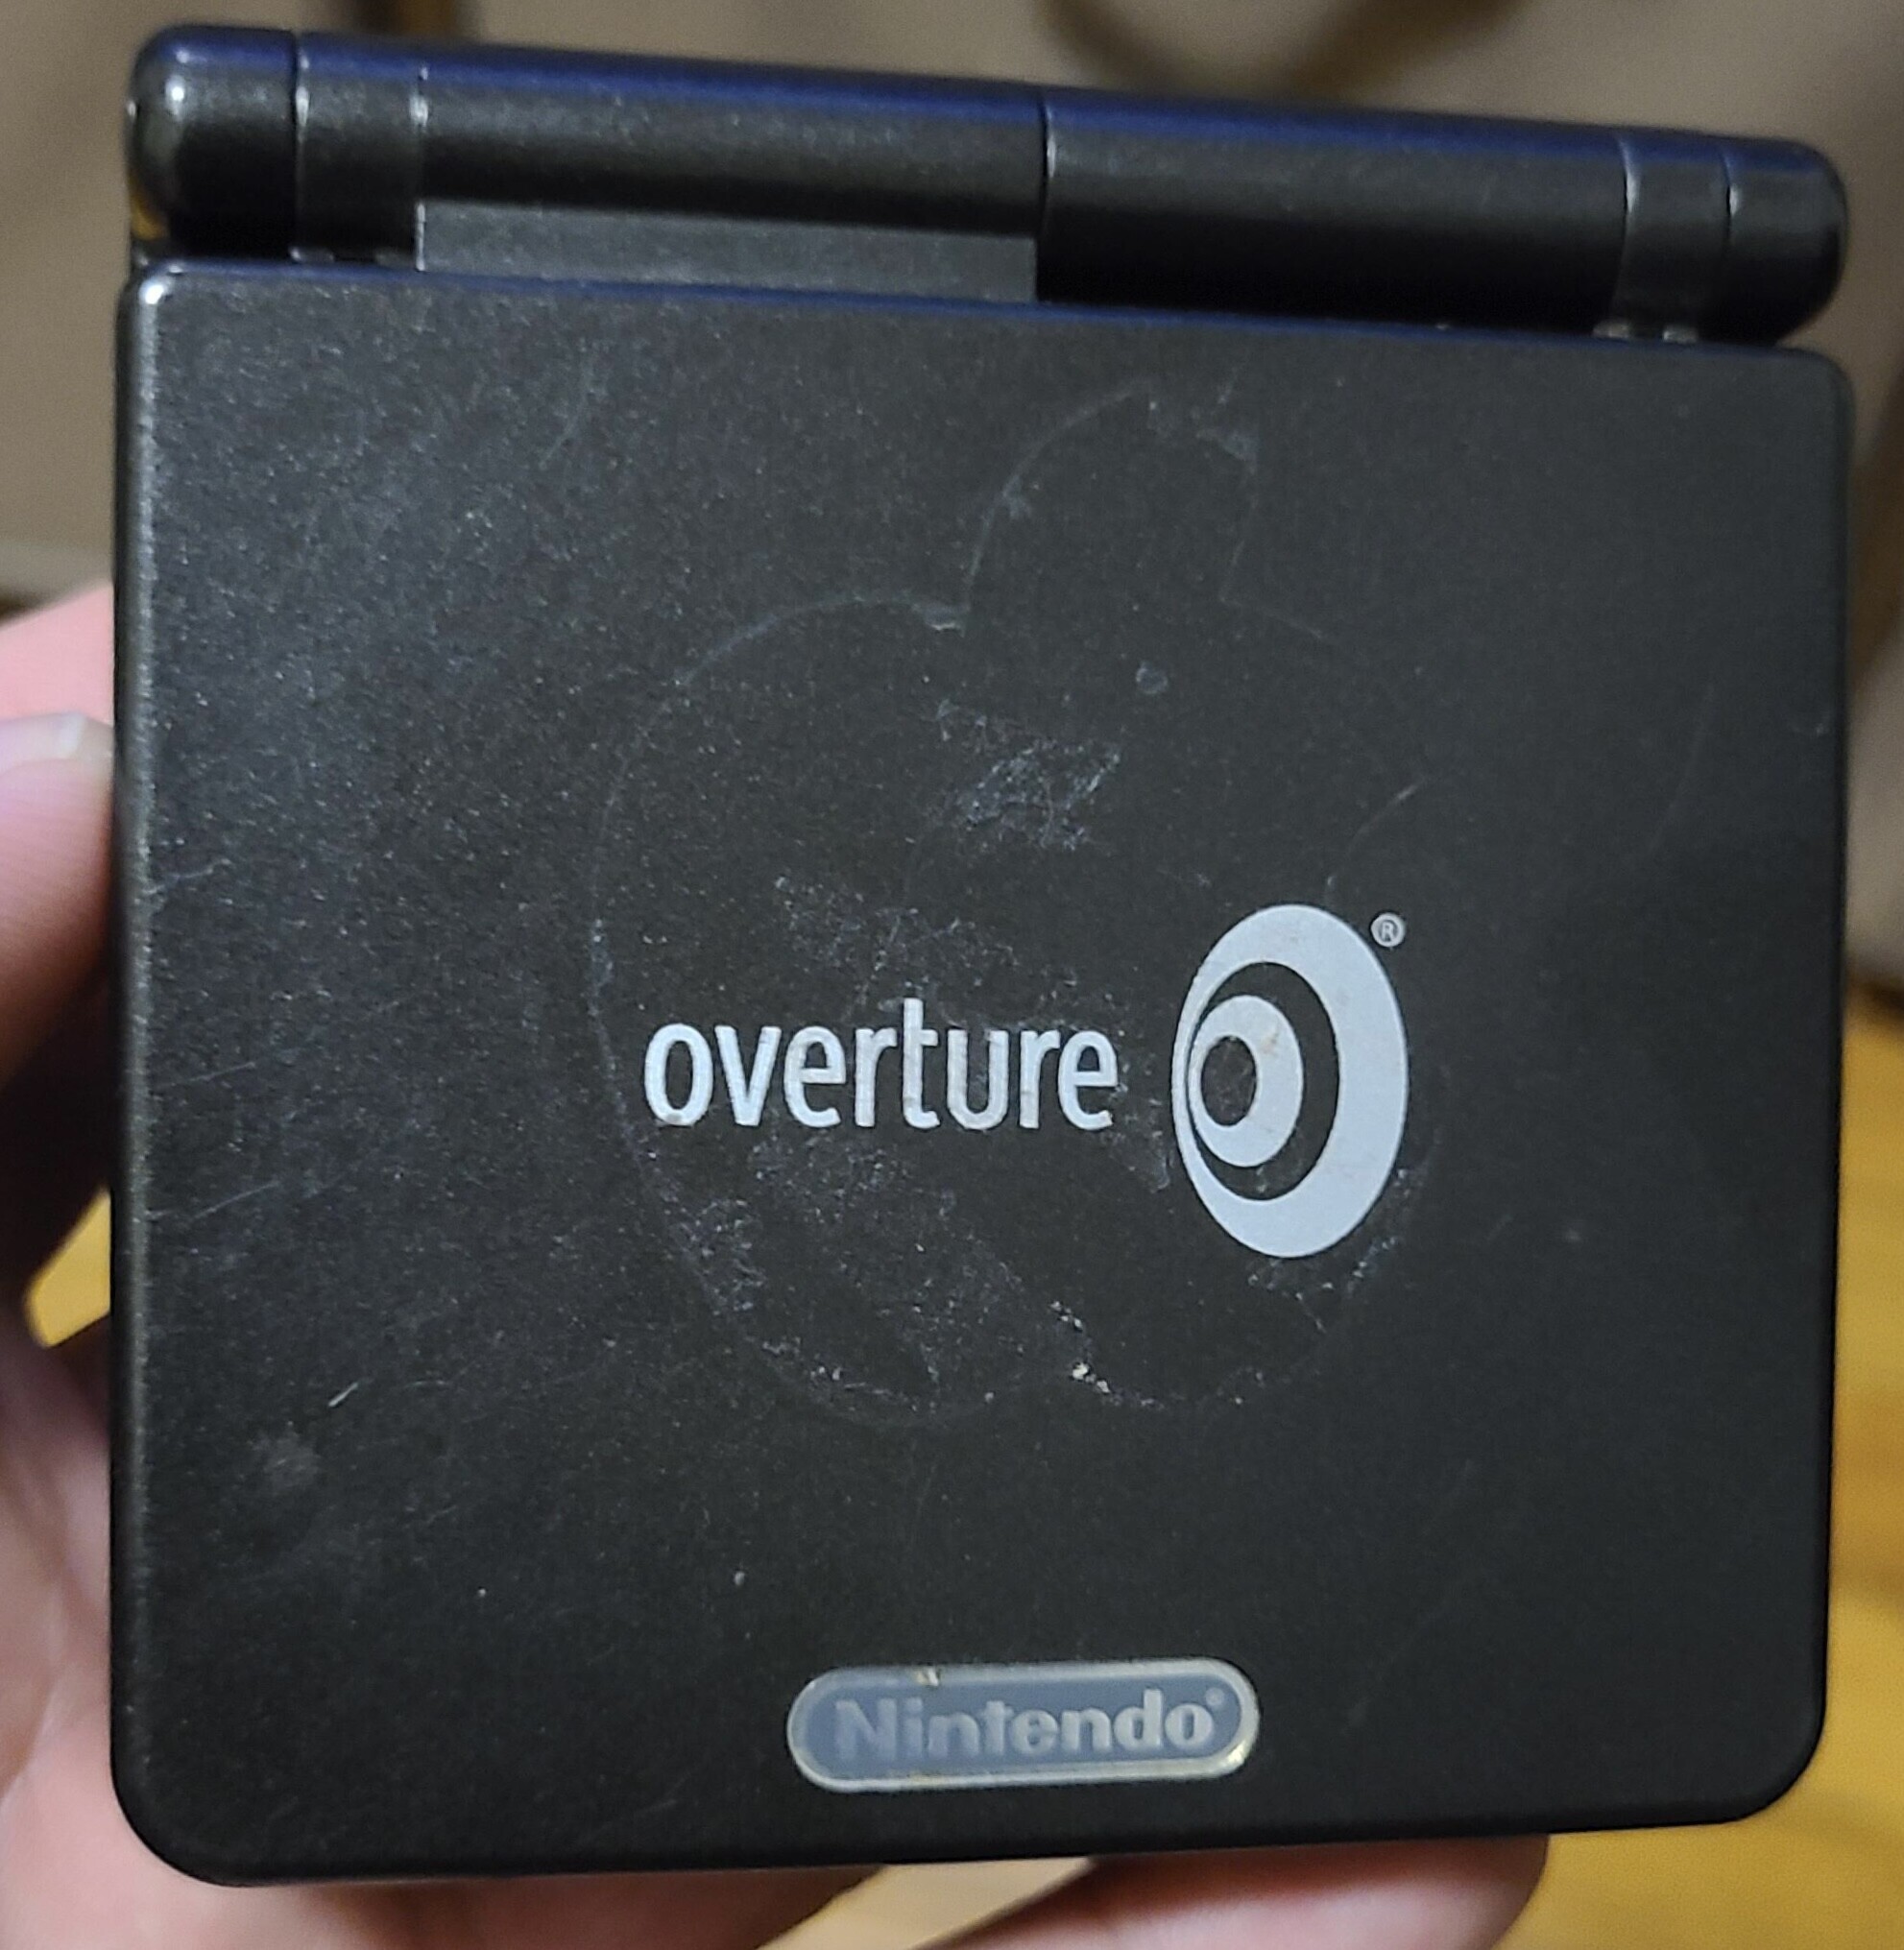  Nintendo Game Boy Advance SP Black Overture Console